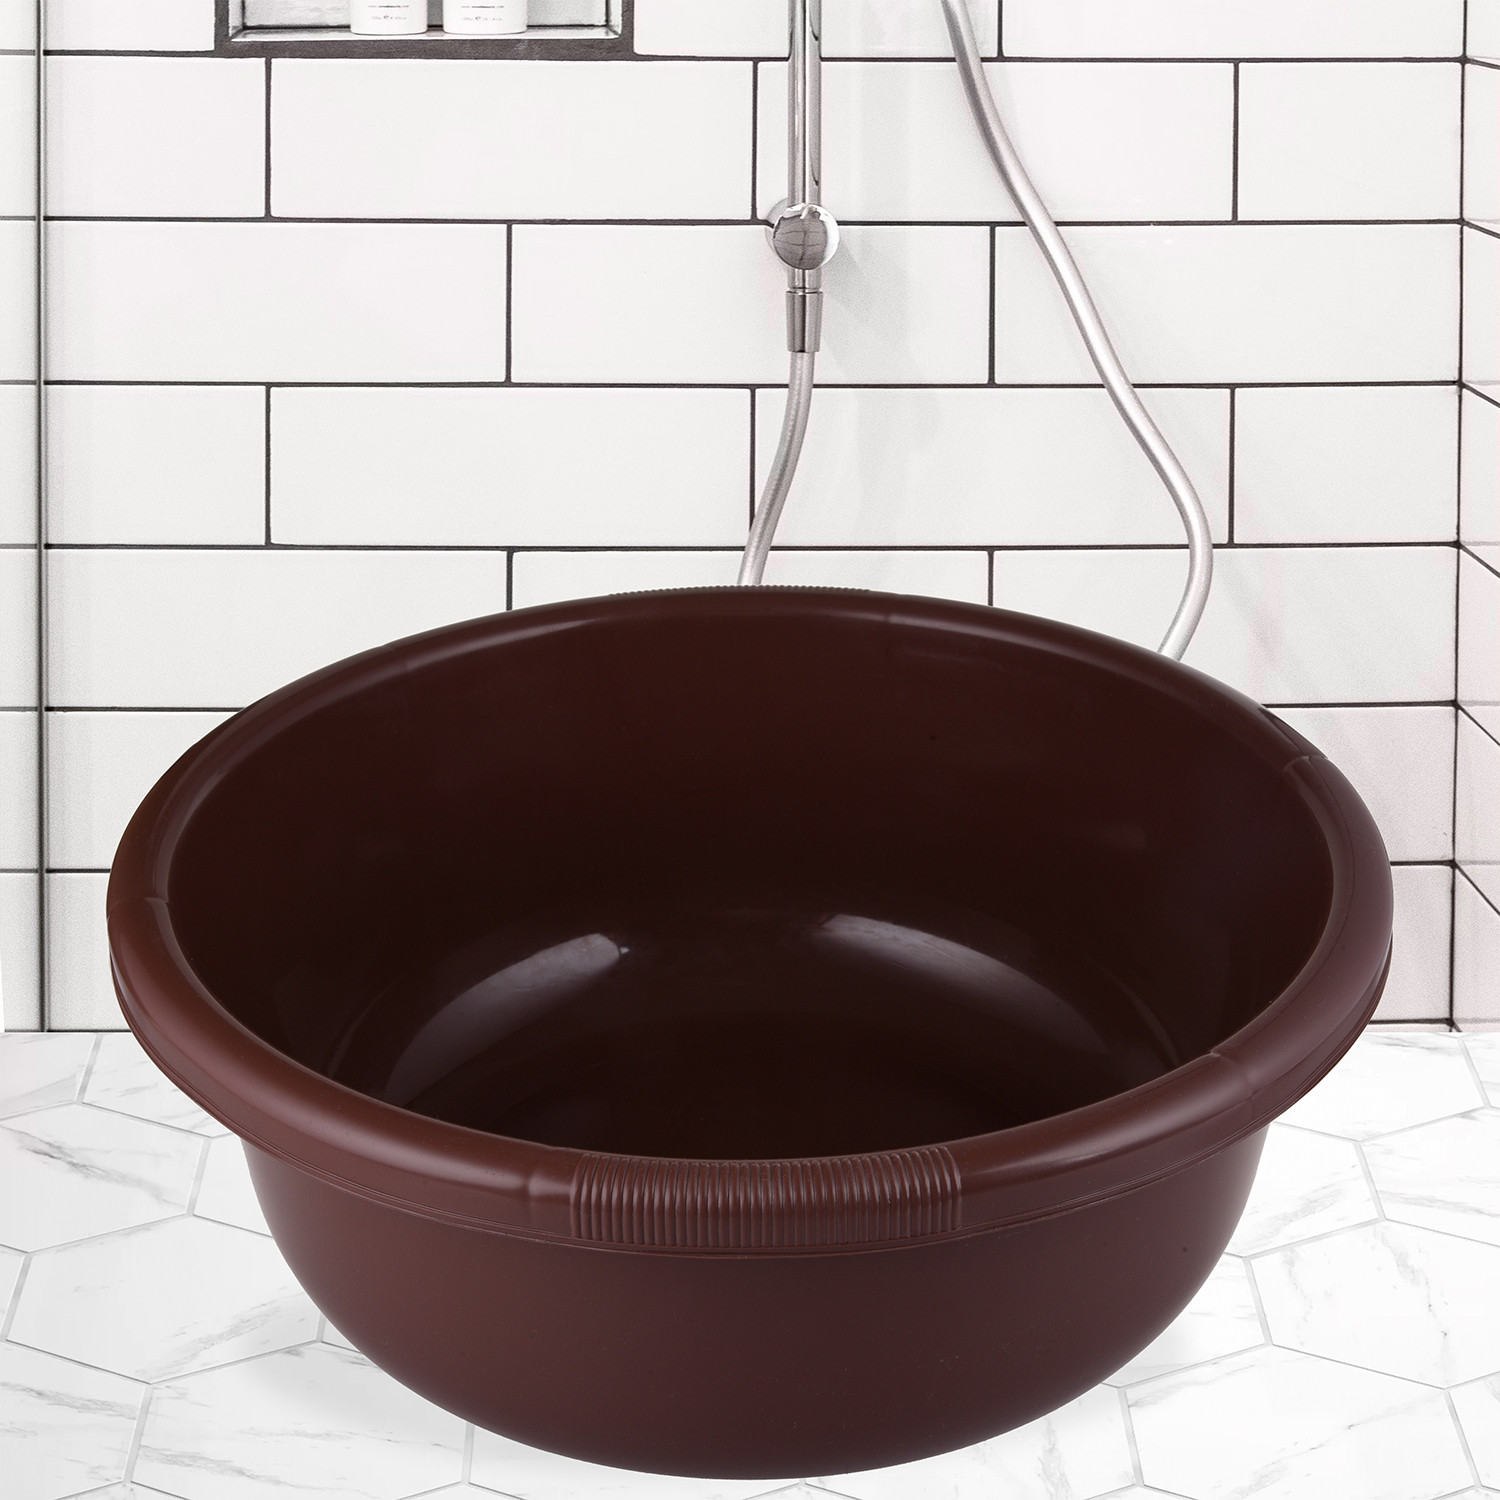 Kuber Industries Bath Tub|Versatile Plastic Utility Gaint Tub|Durable Deep Tub for Baby Bathing|Washing Clothes|Feeding Pan|26 Liter (Brown)